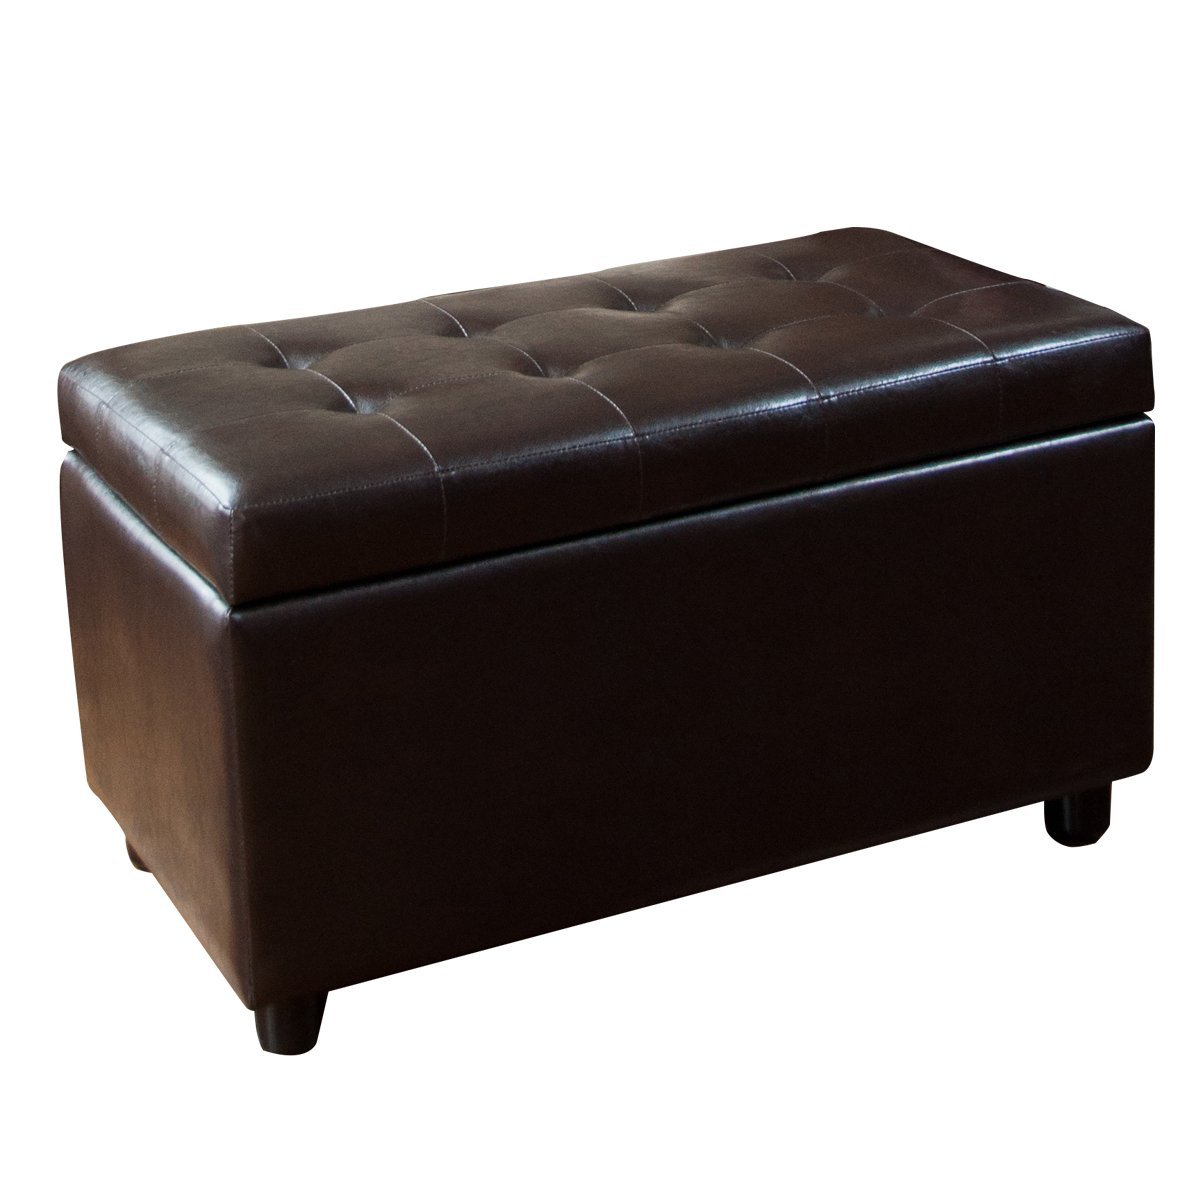 Cosmopolitan Faux Leather Storage Ottoman Bench – $57.83! Free shipping!